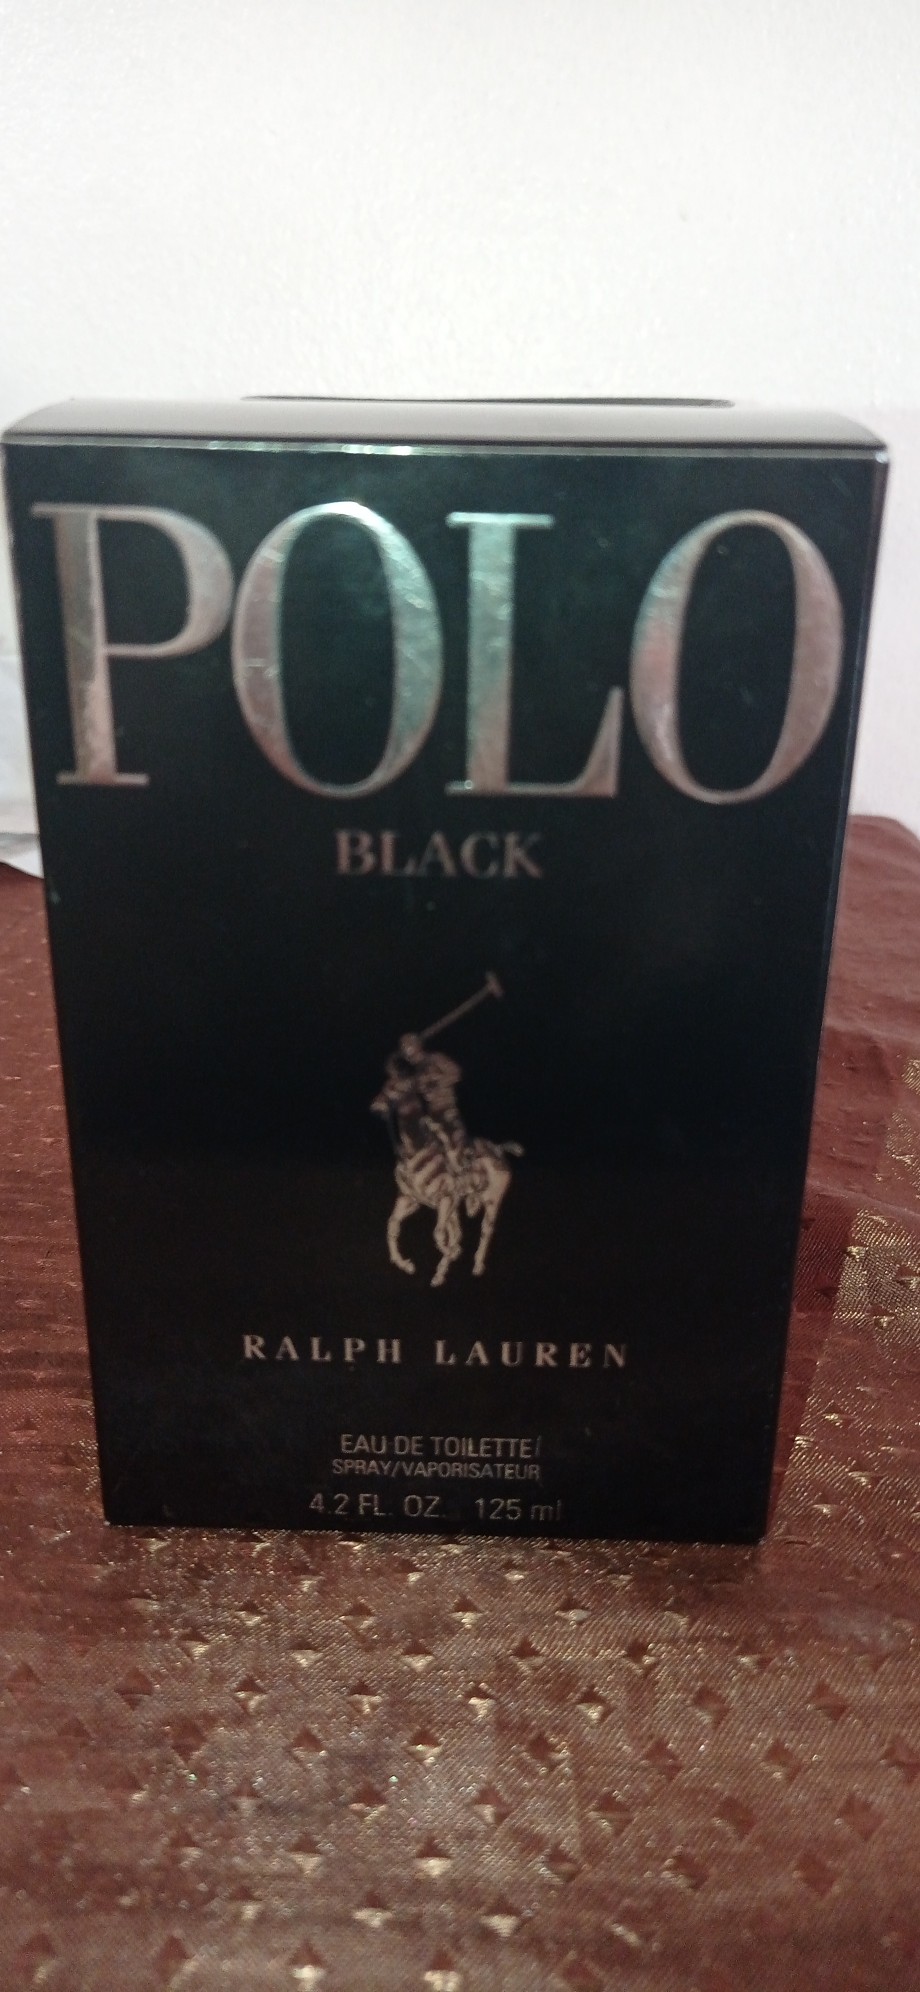 salud y belleza - Ralph Lauren Polo Black